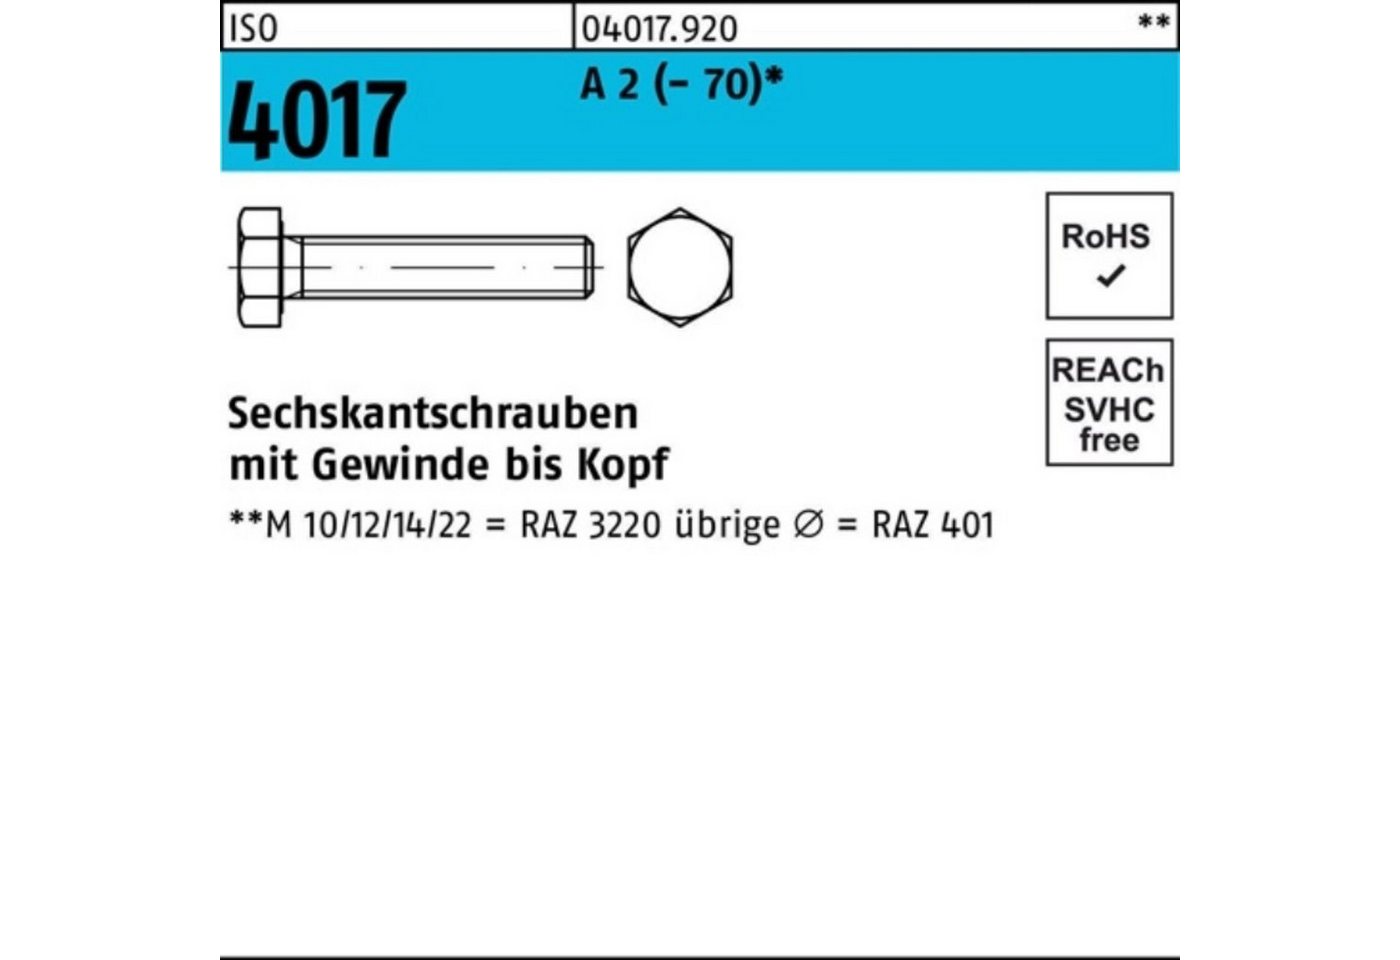 Bufab Sechskantschraube 100er Pack Sechskantschraube ISO 4017 VG M16x 75 A 2 (70) 25 Stück von Bufab